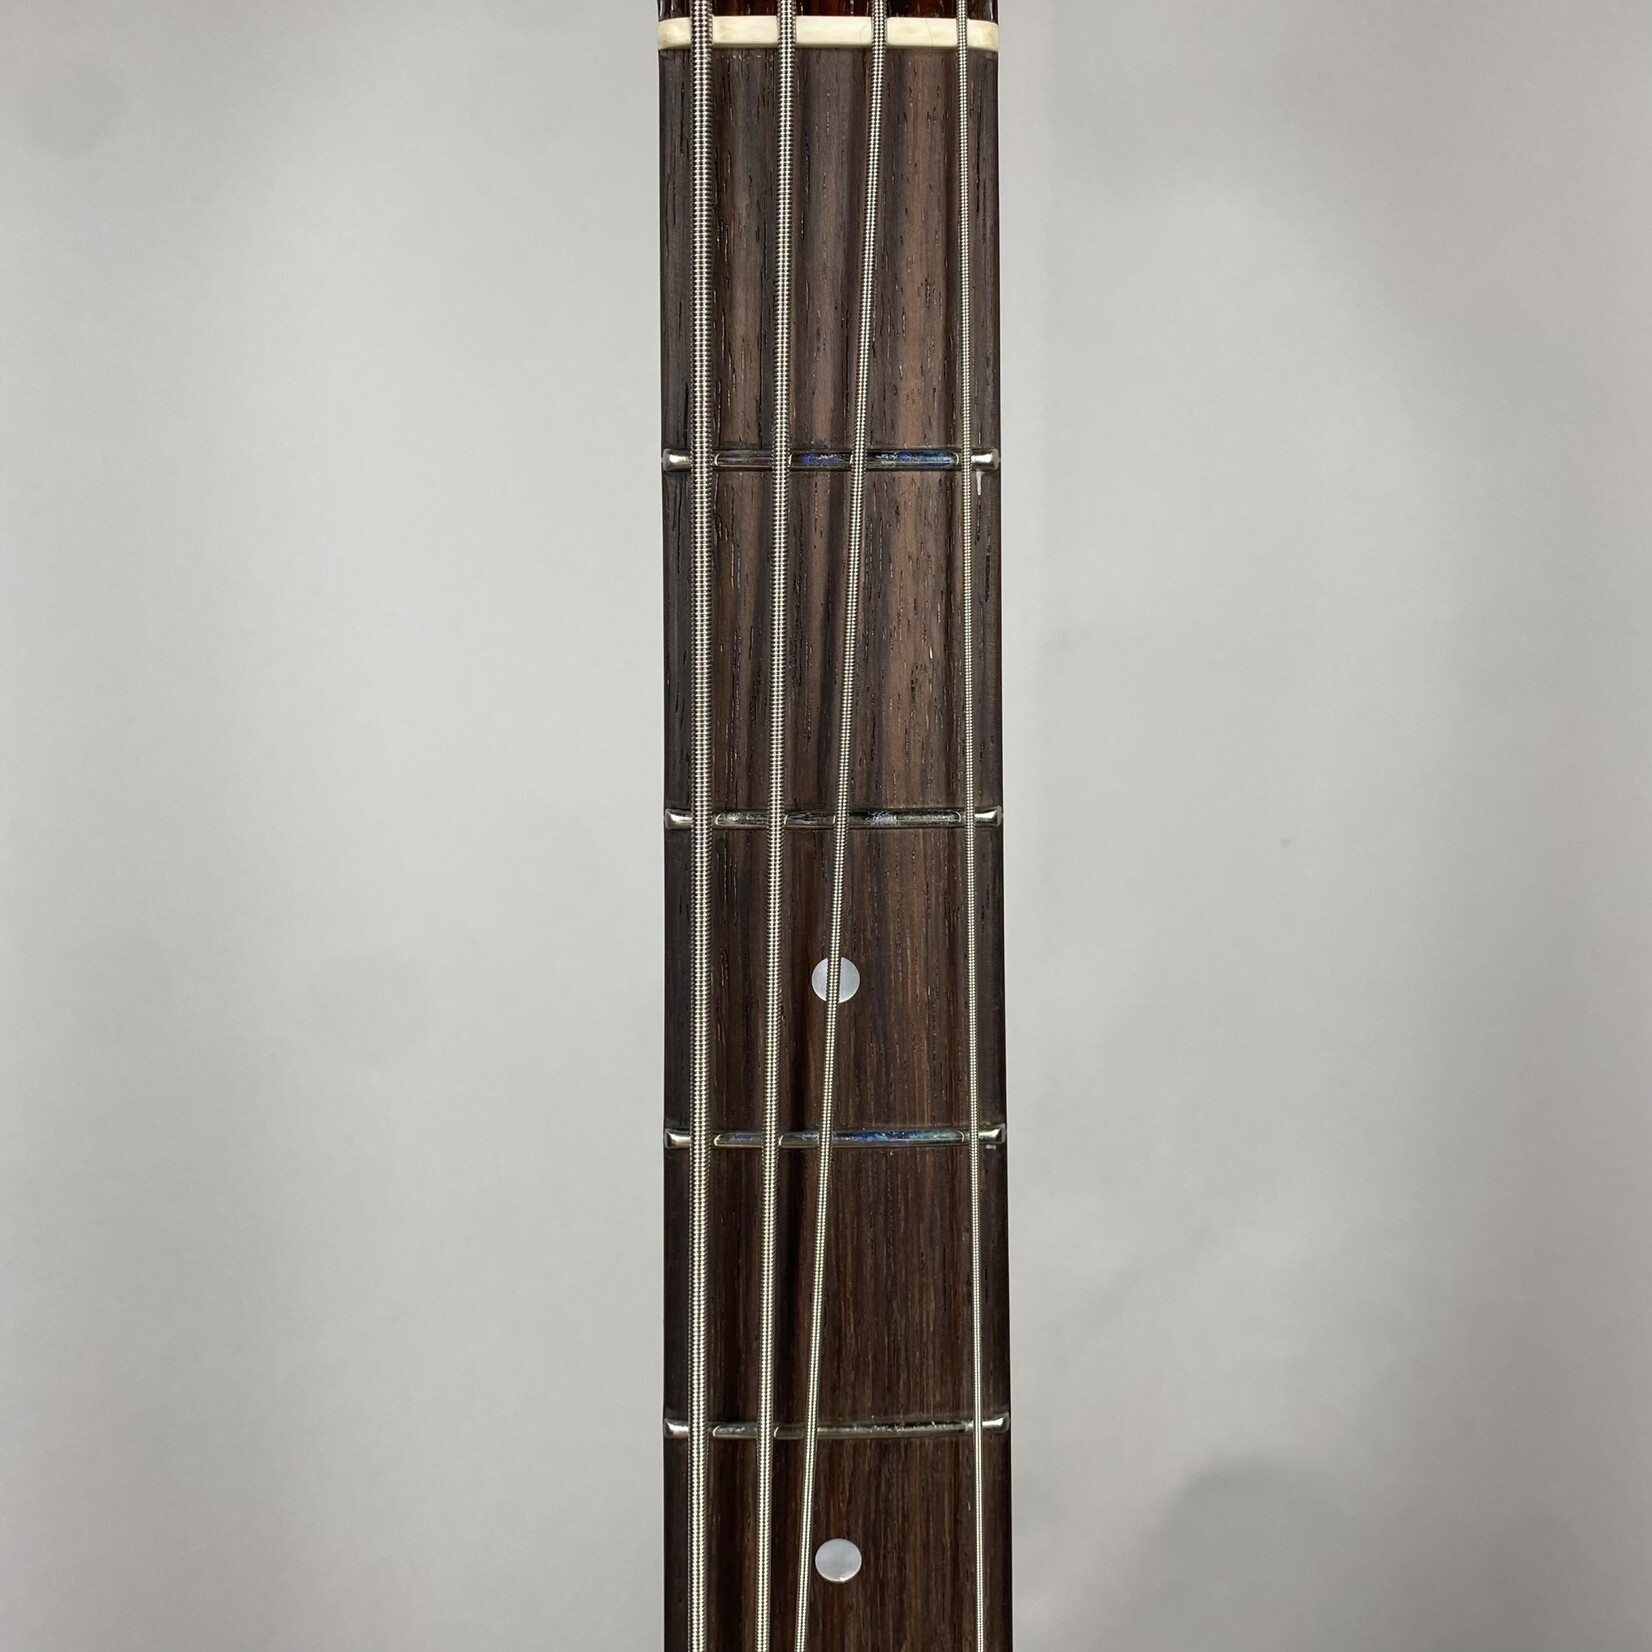 Fender 2019 Fender Custom Shop Limited Edition Phil Lynott Precision Bass